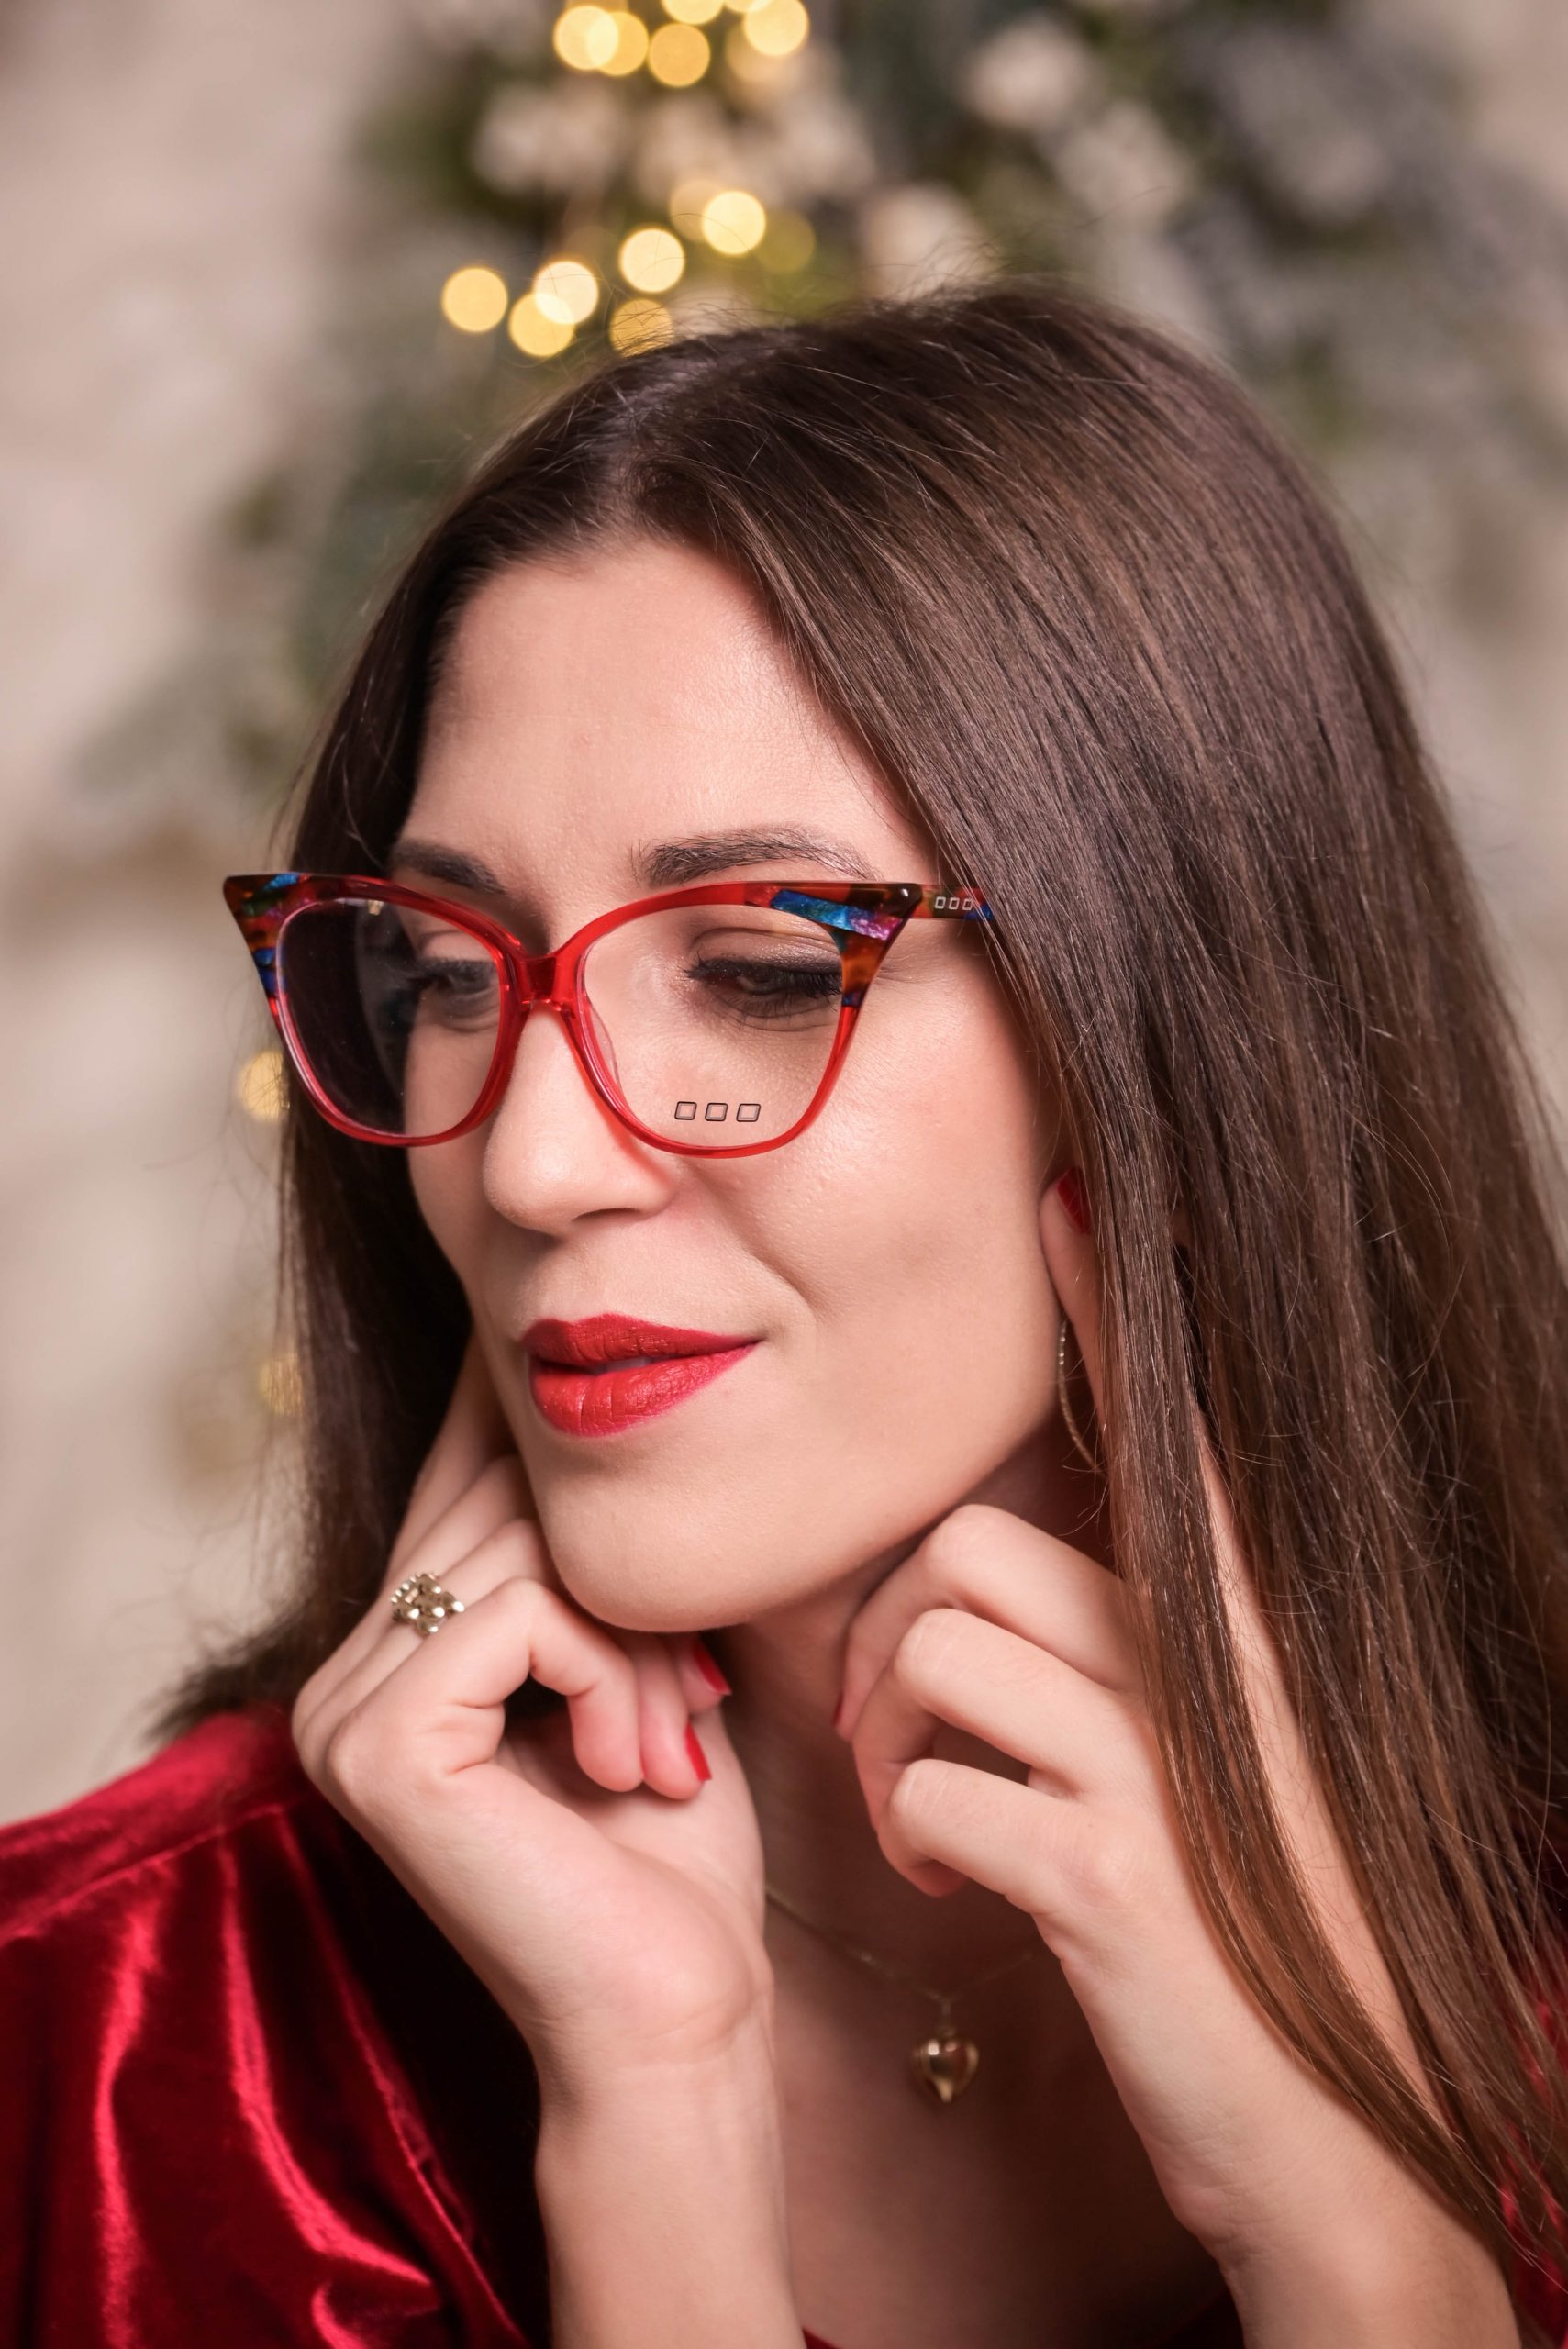 Očna optika Damir ima najljepše modele naočala za blagdane pred nama!